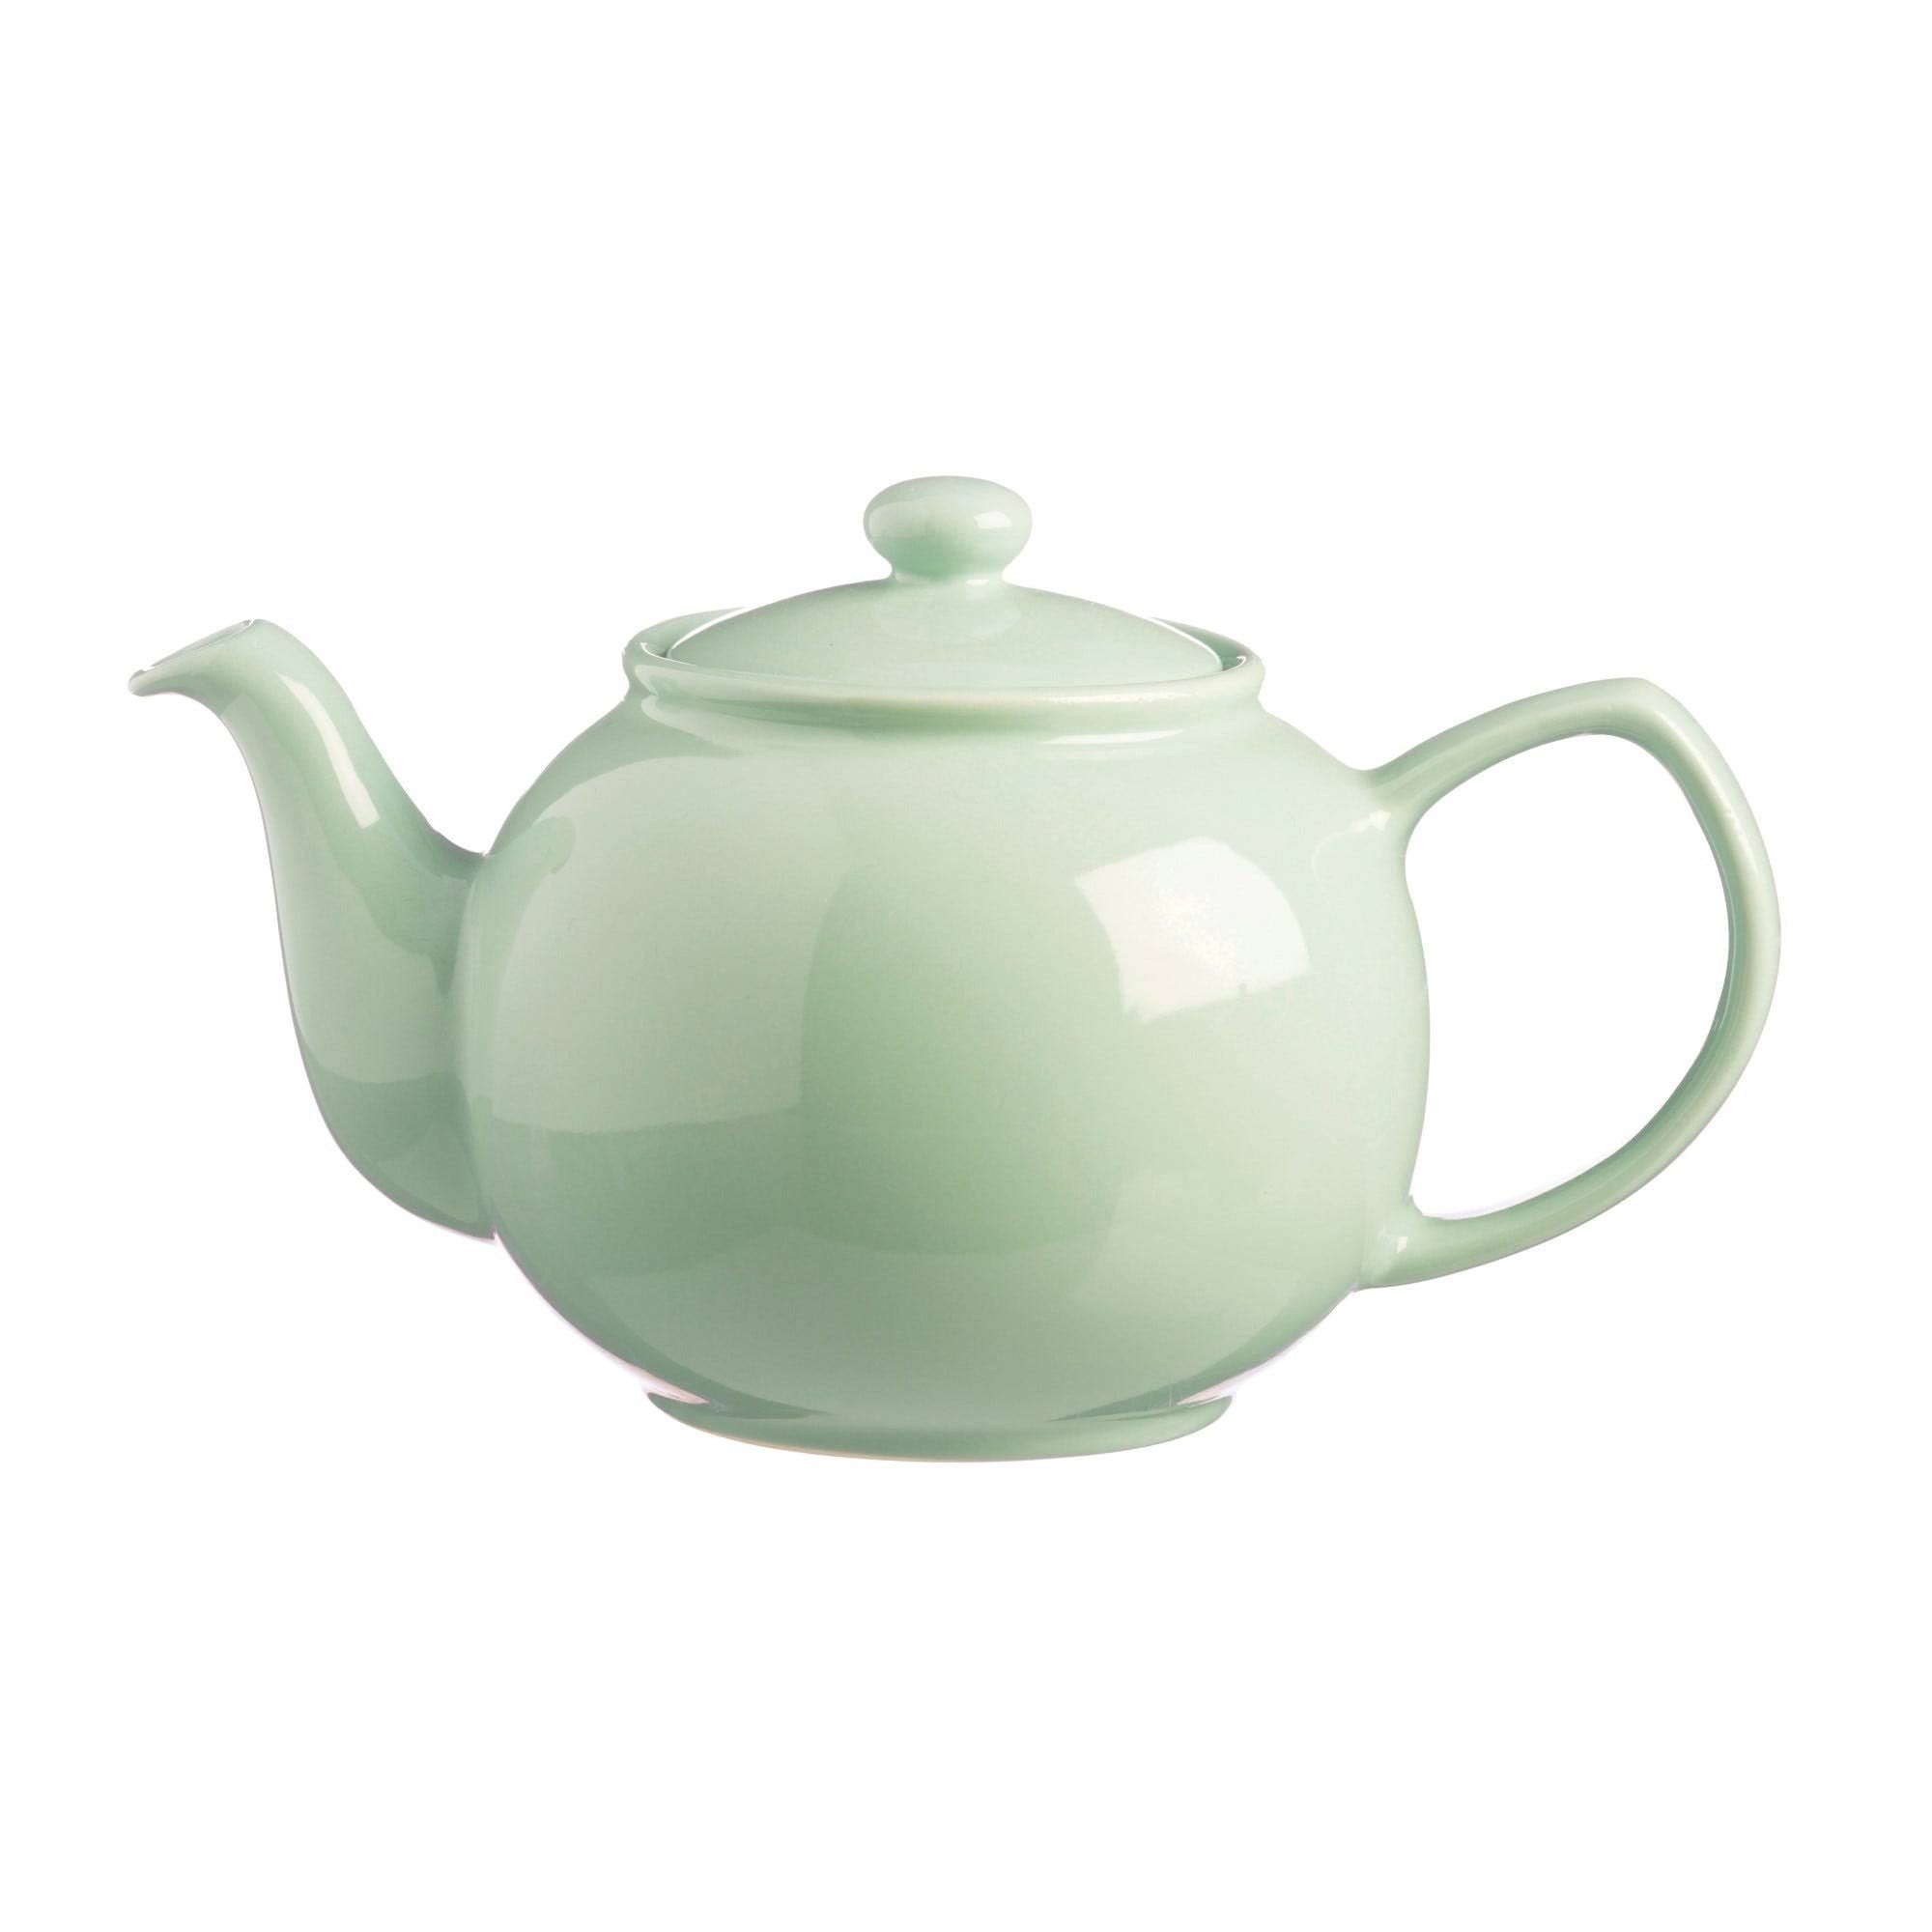 Price & Kensington 6 Cup Teapot - Mint